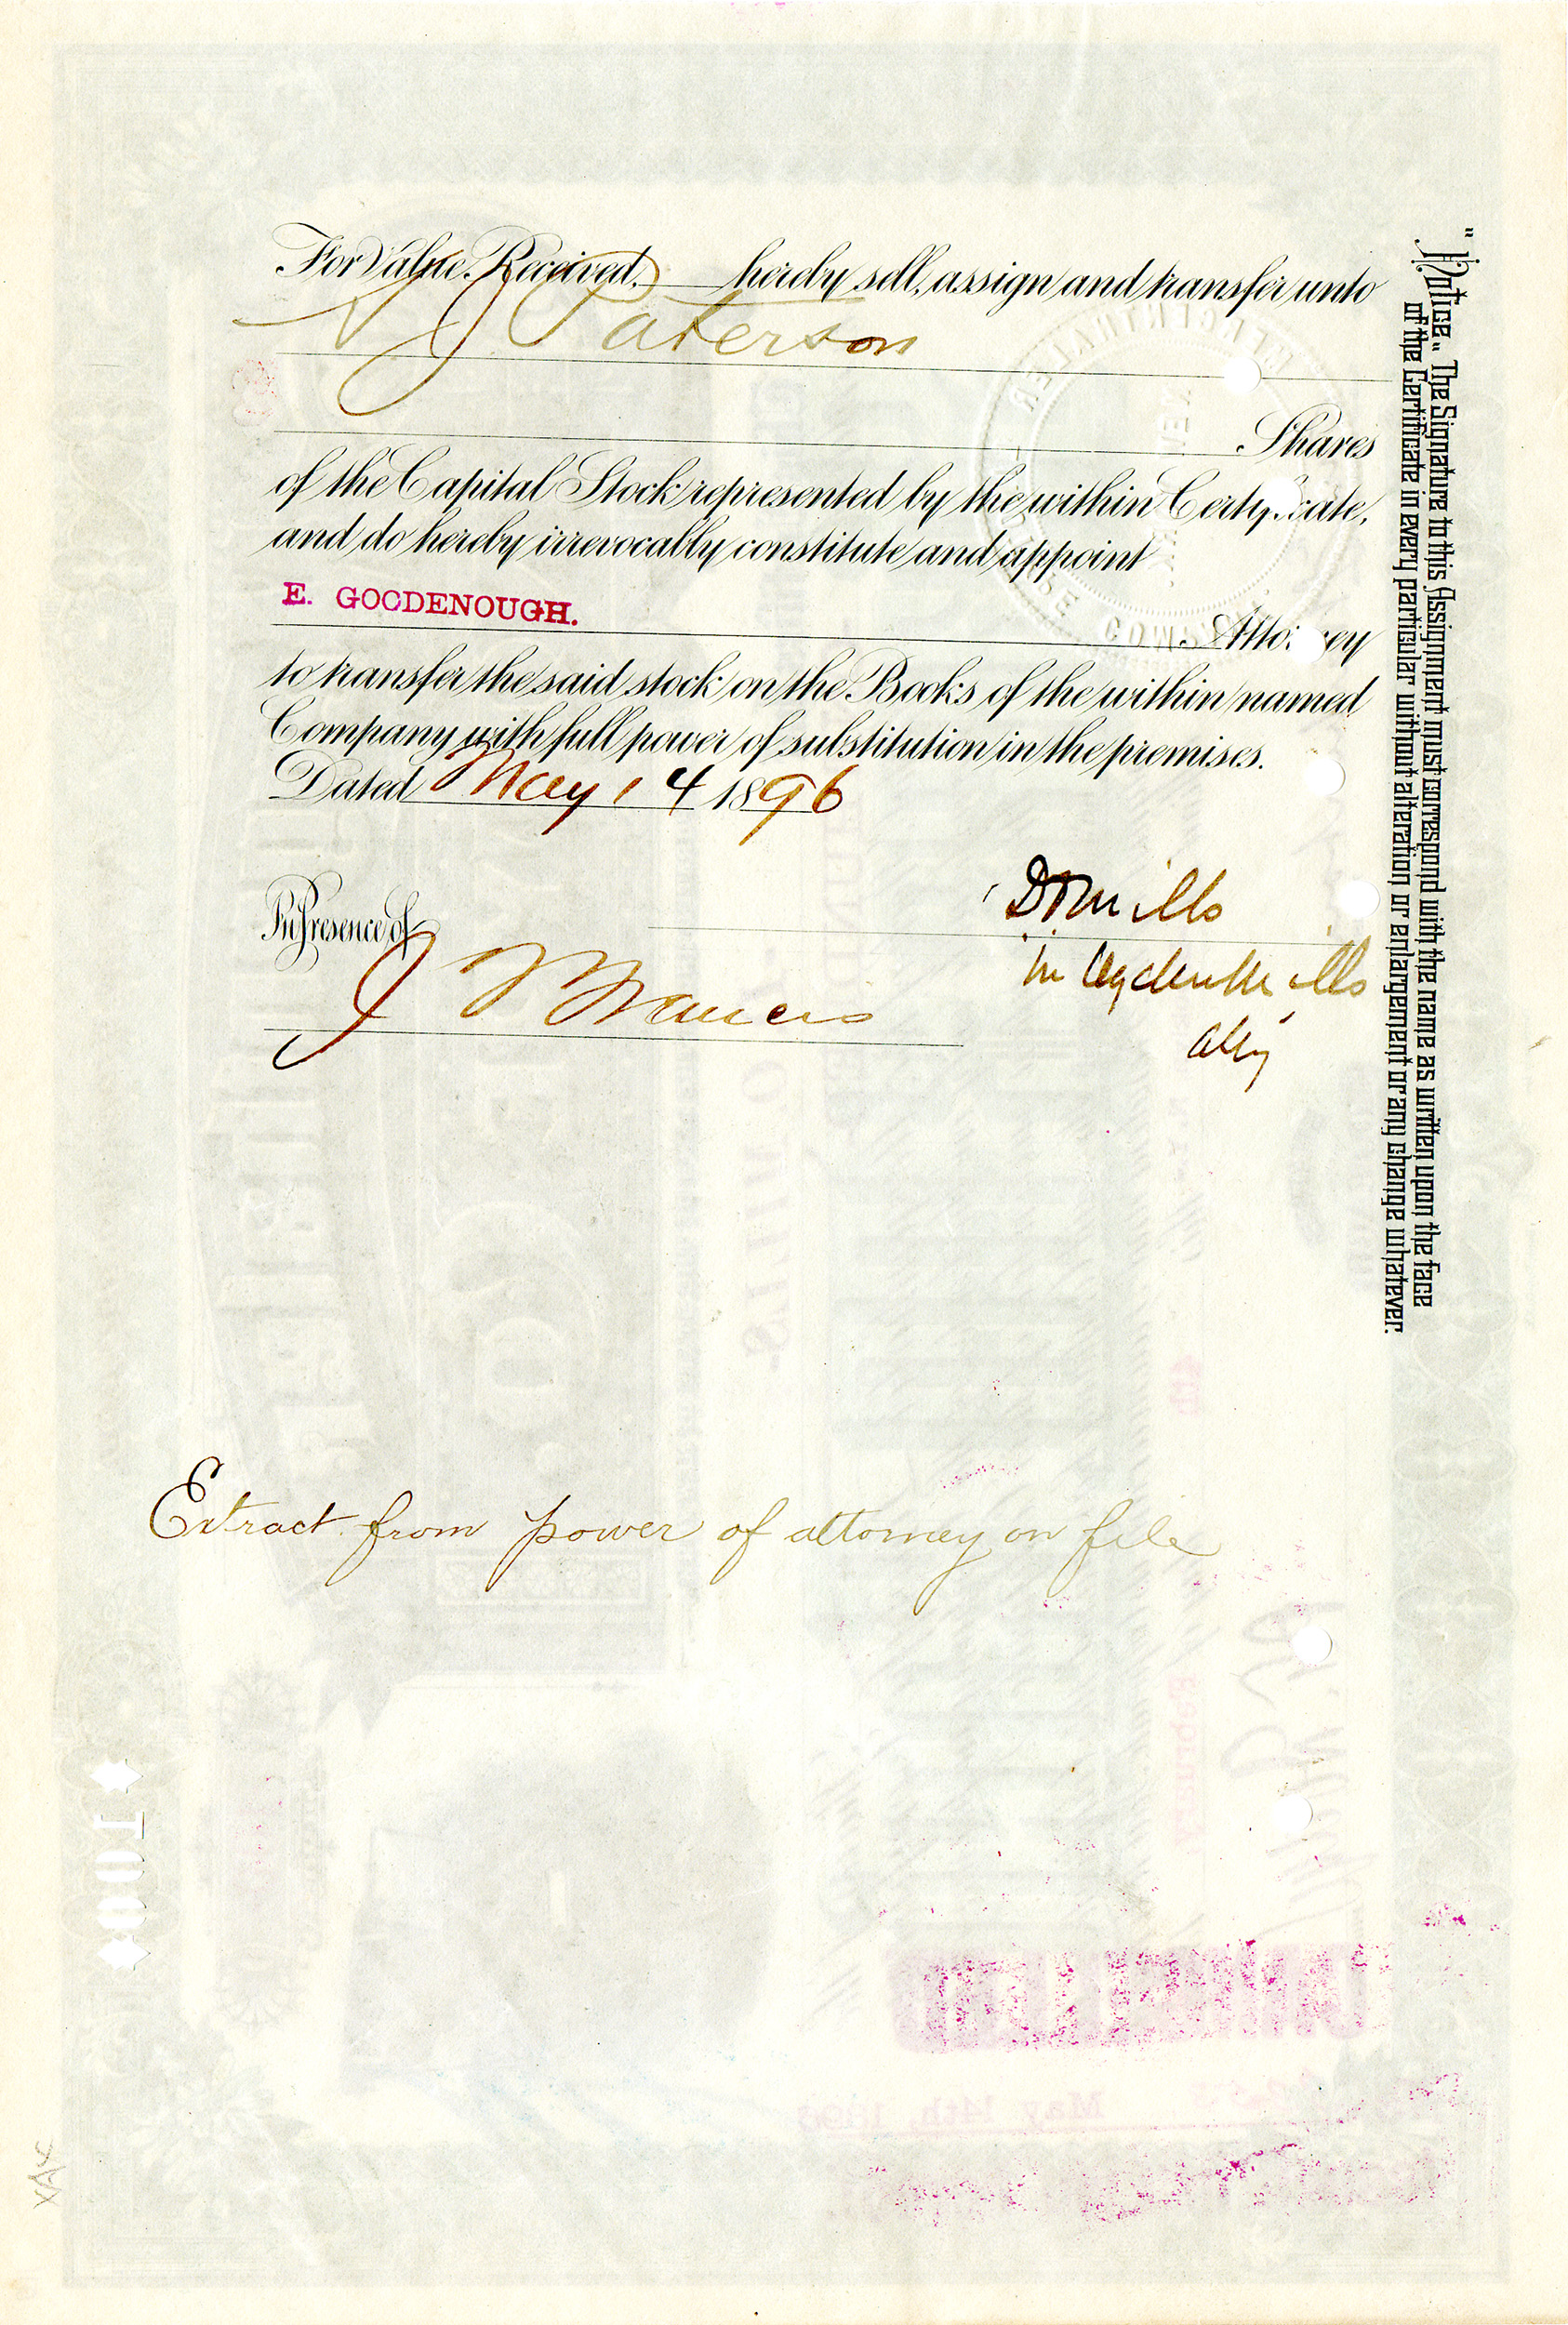 Linotype Stock Certificate Back